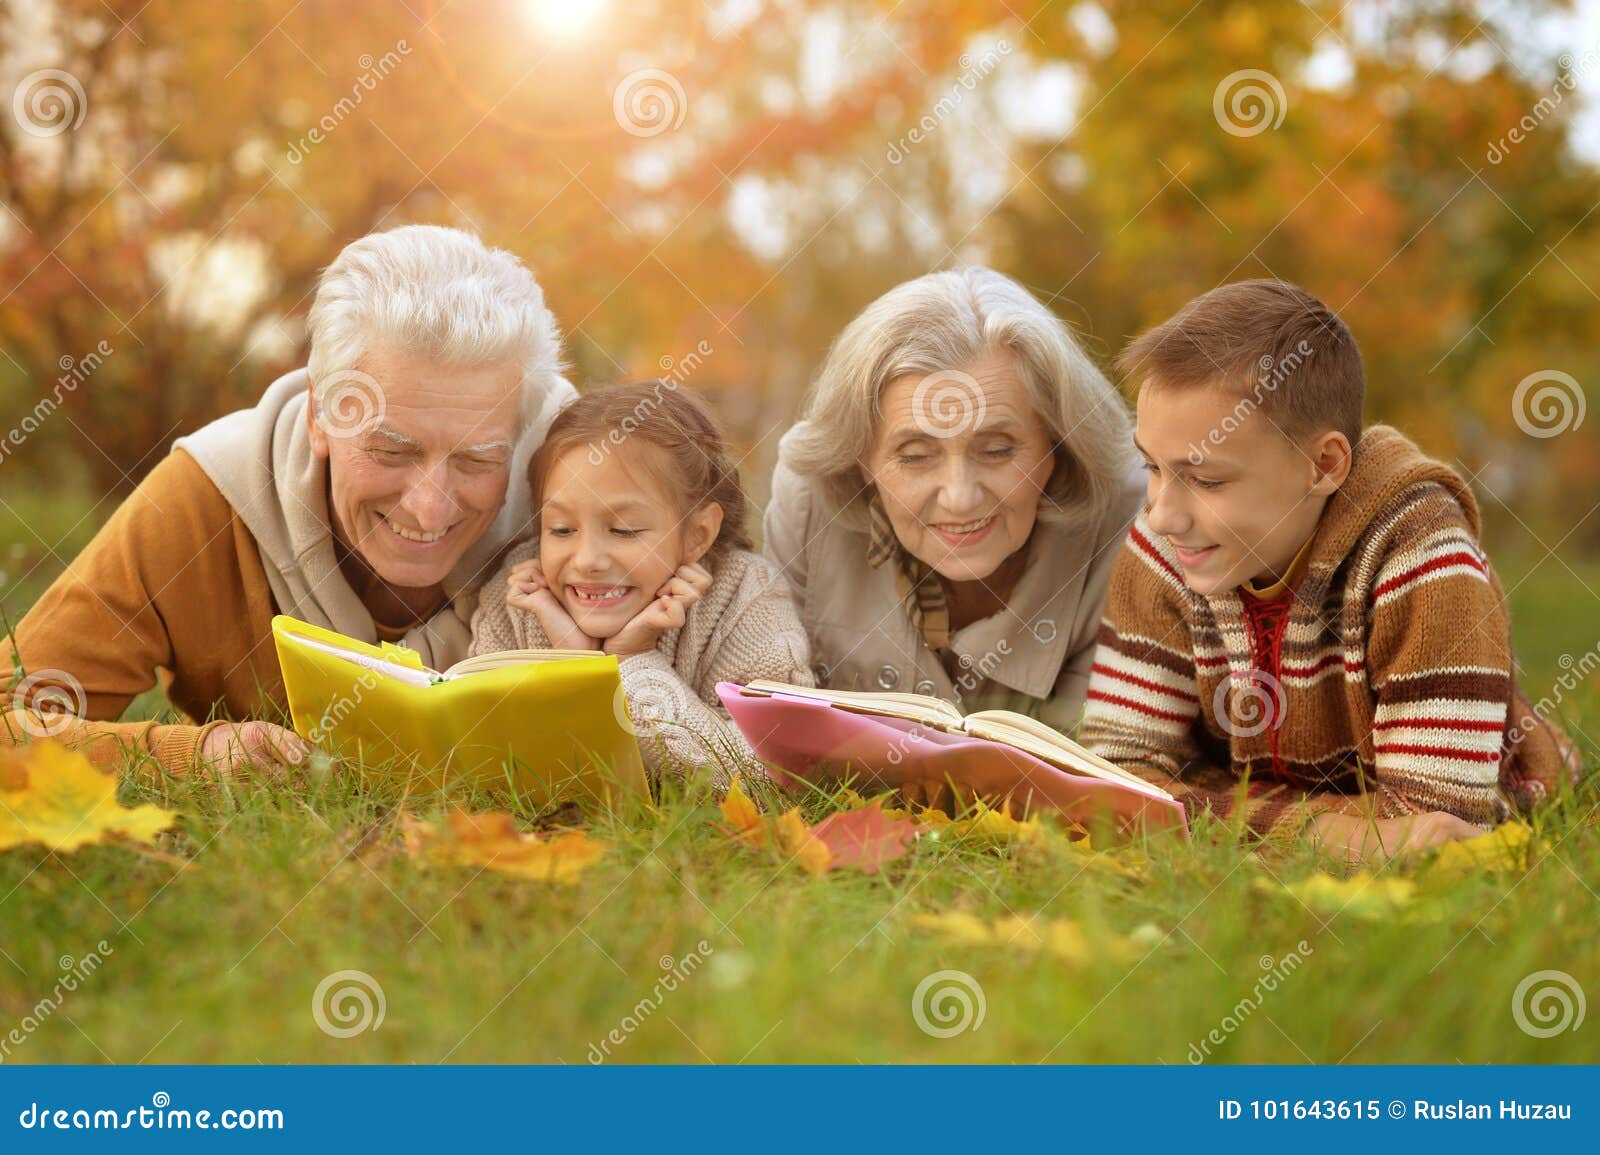 grandparents spending time with grandchildren